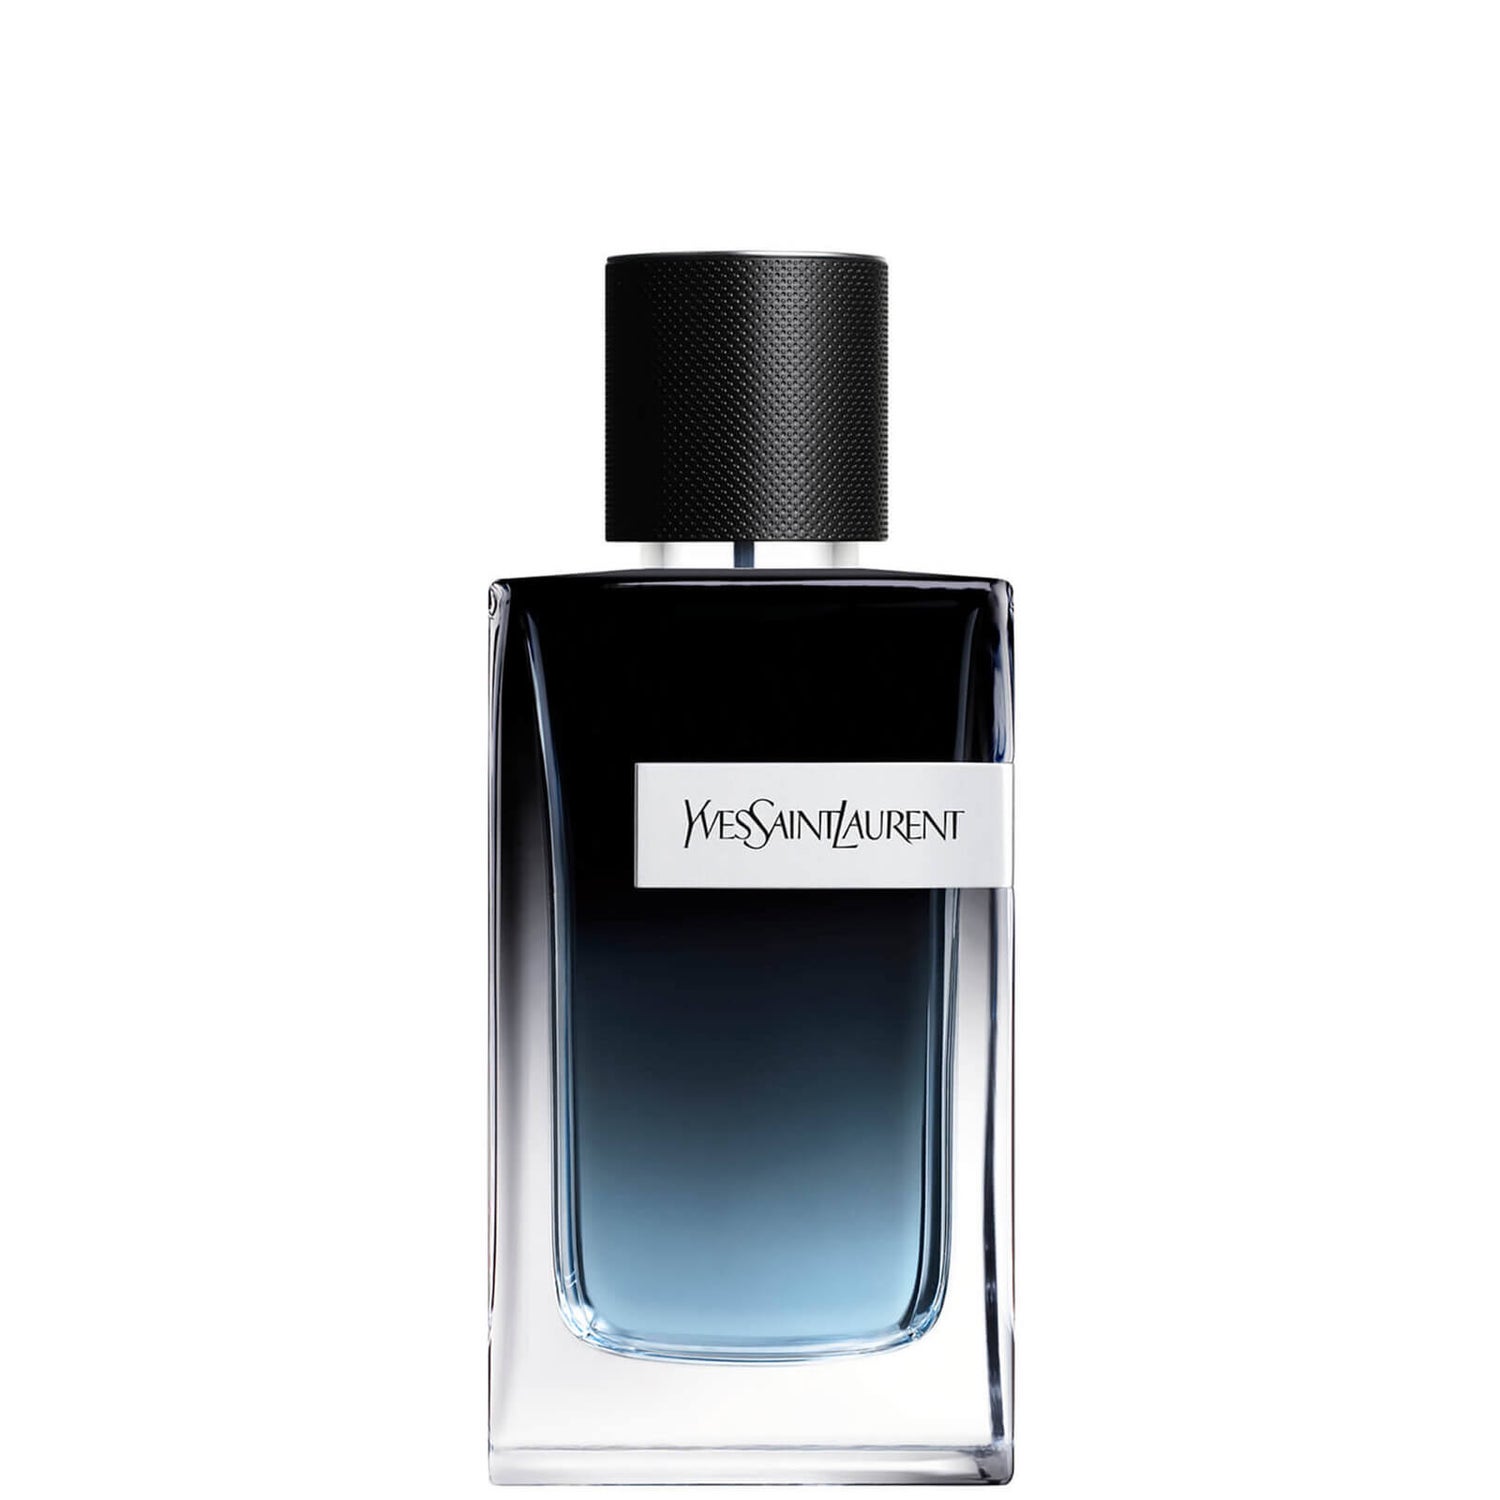 Yves Saint Laurent Y Le Parfum Spray 2 oz